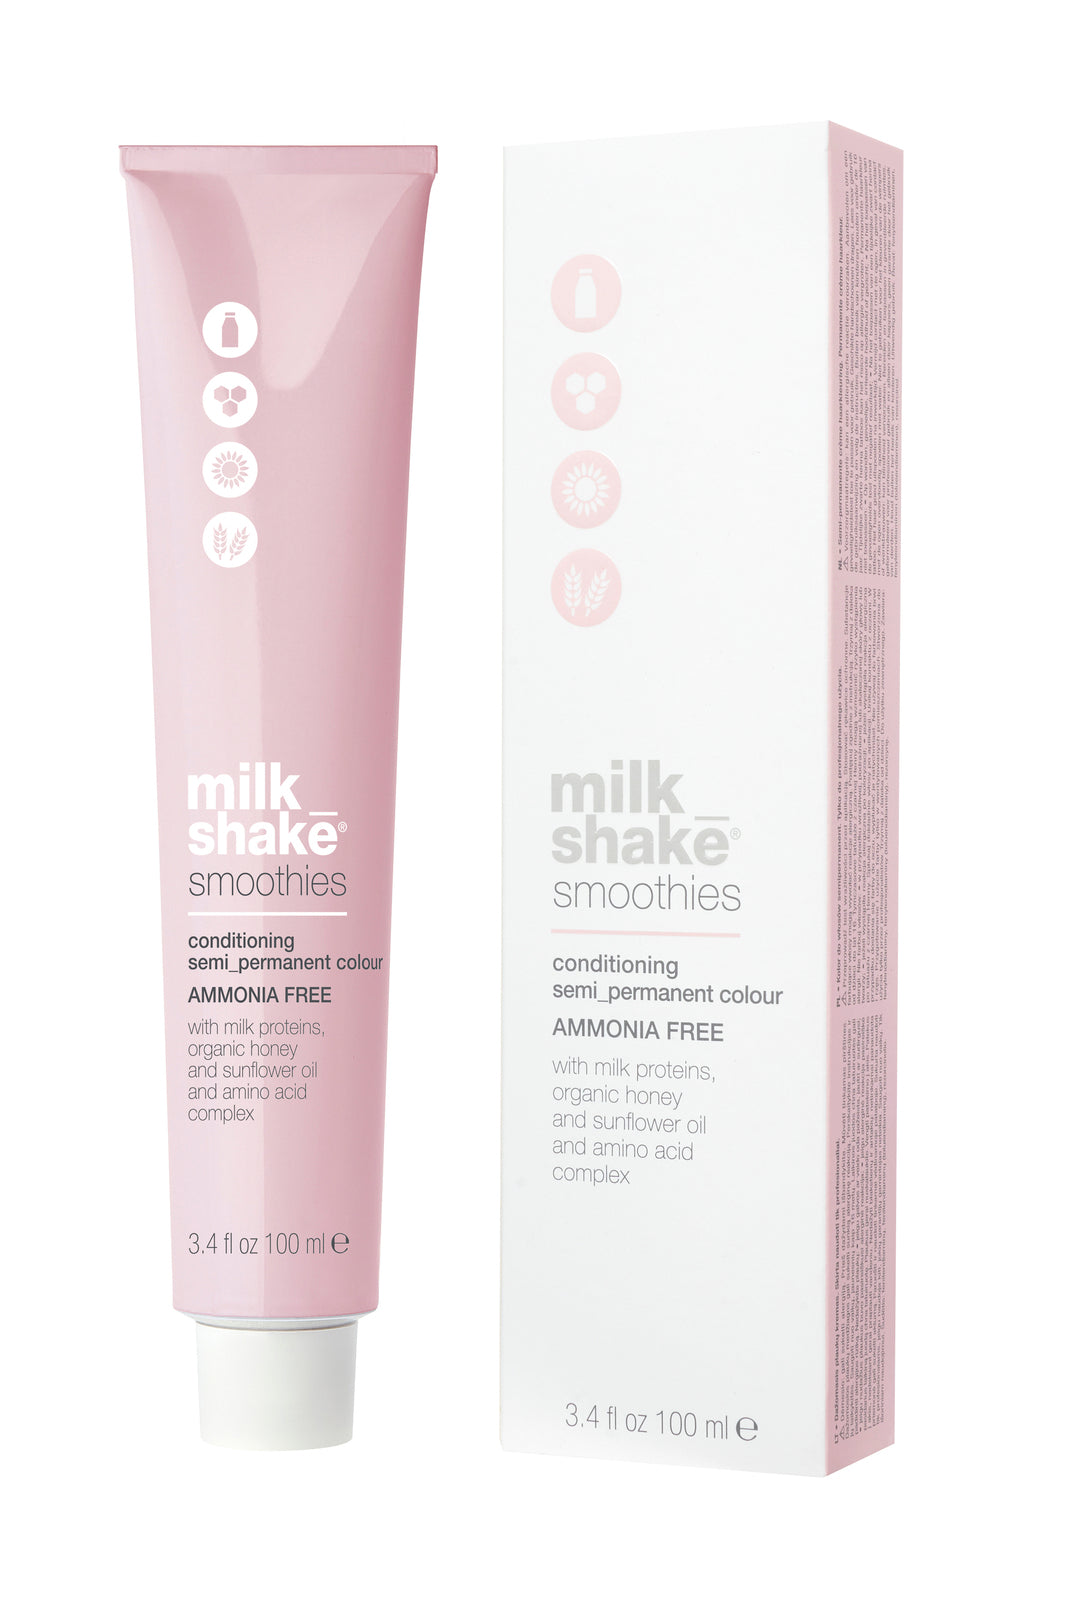 Milkshake smoothies semi-permanent color pink grapefruit